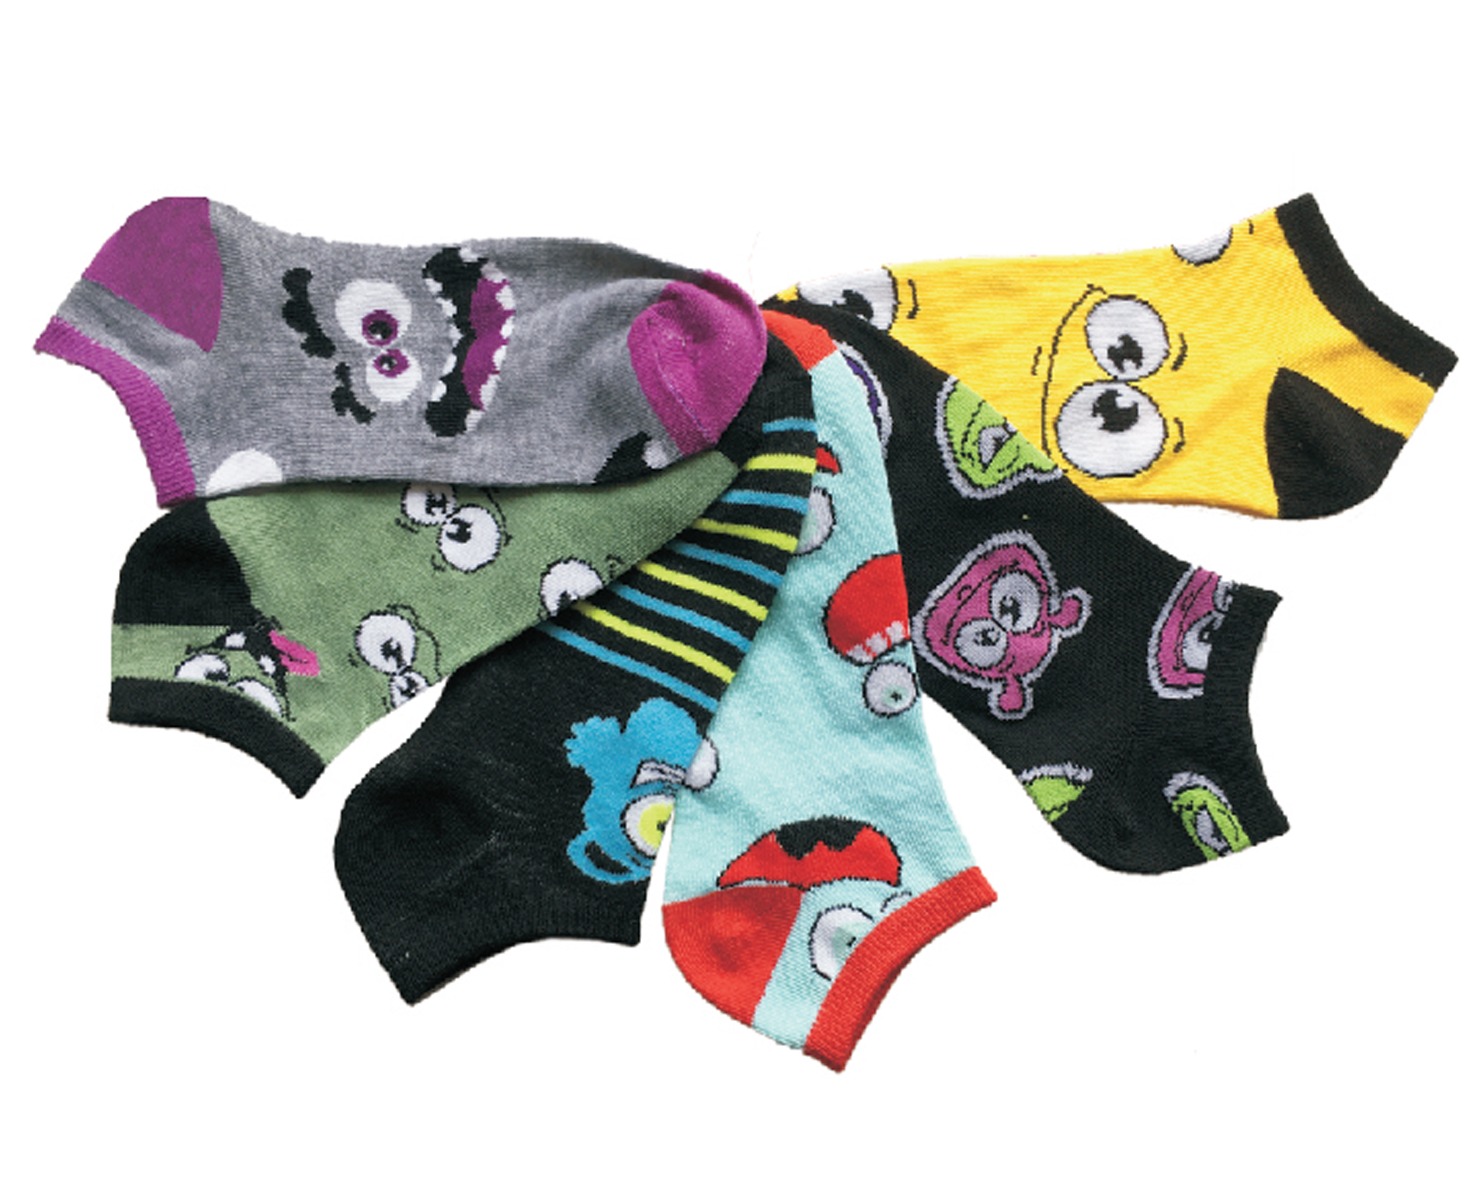 Women's Low Cut Novelty Socks - Monster Creature Print - Size 9-11 - 6-Pair Packs